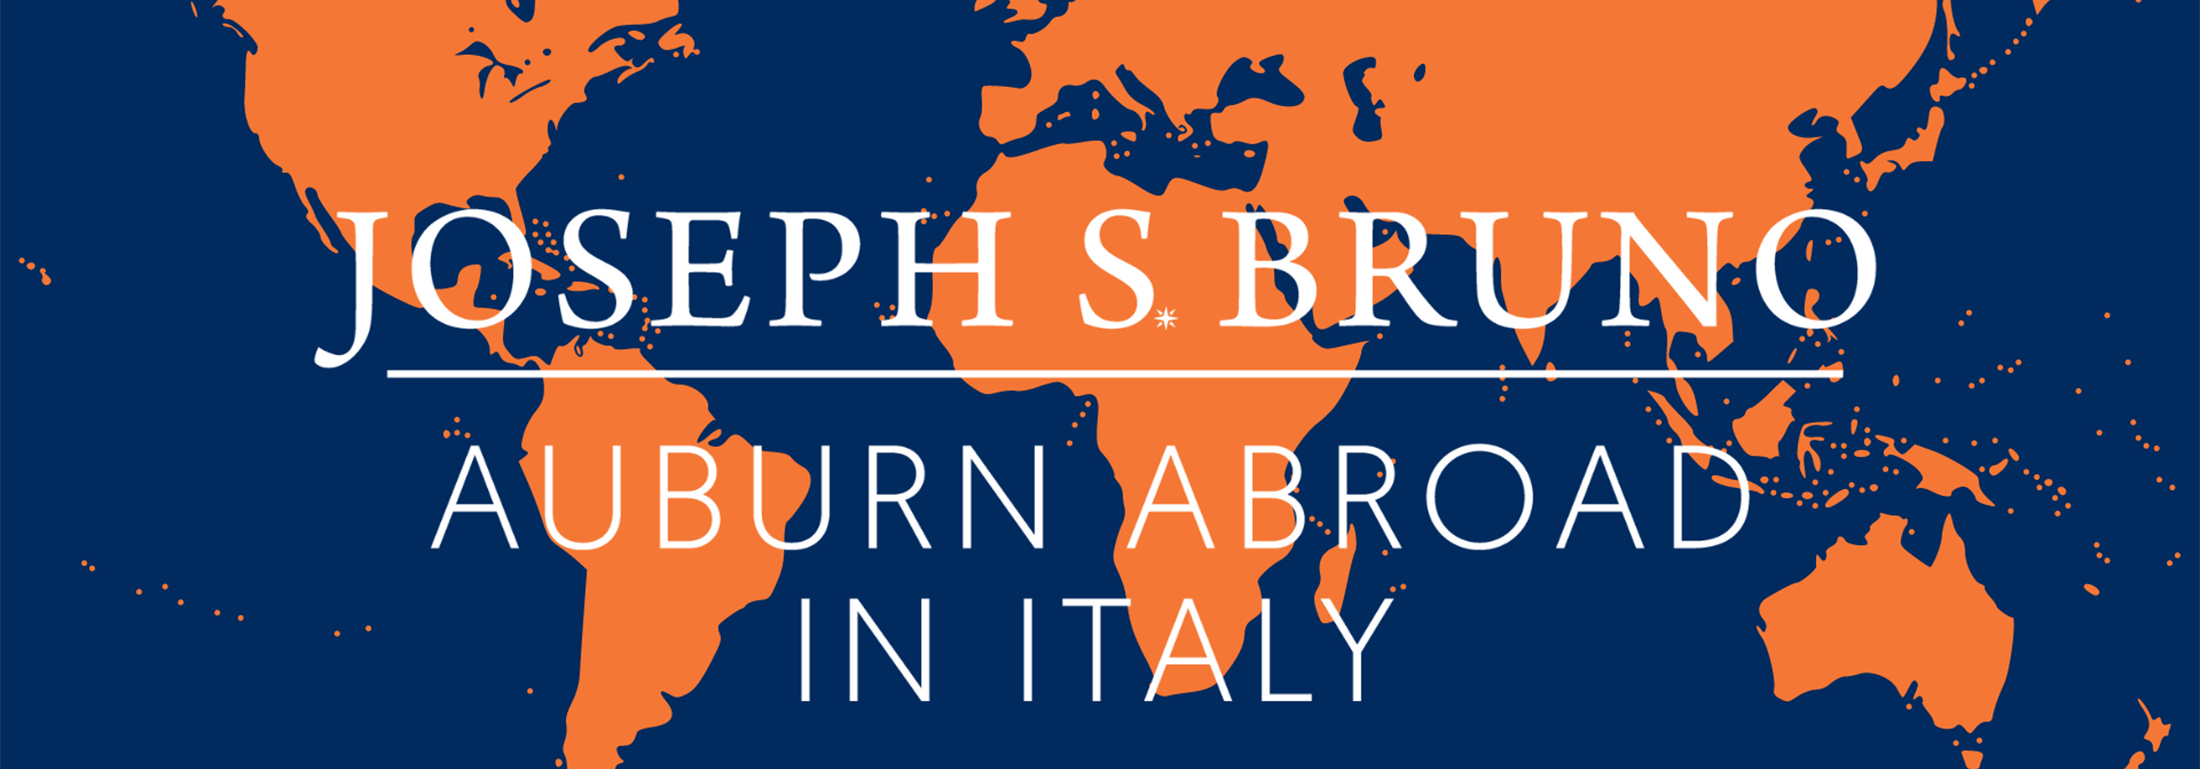 Joseph S. Bruno Auburn Abroad in Italy - world map background